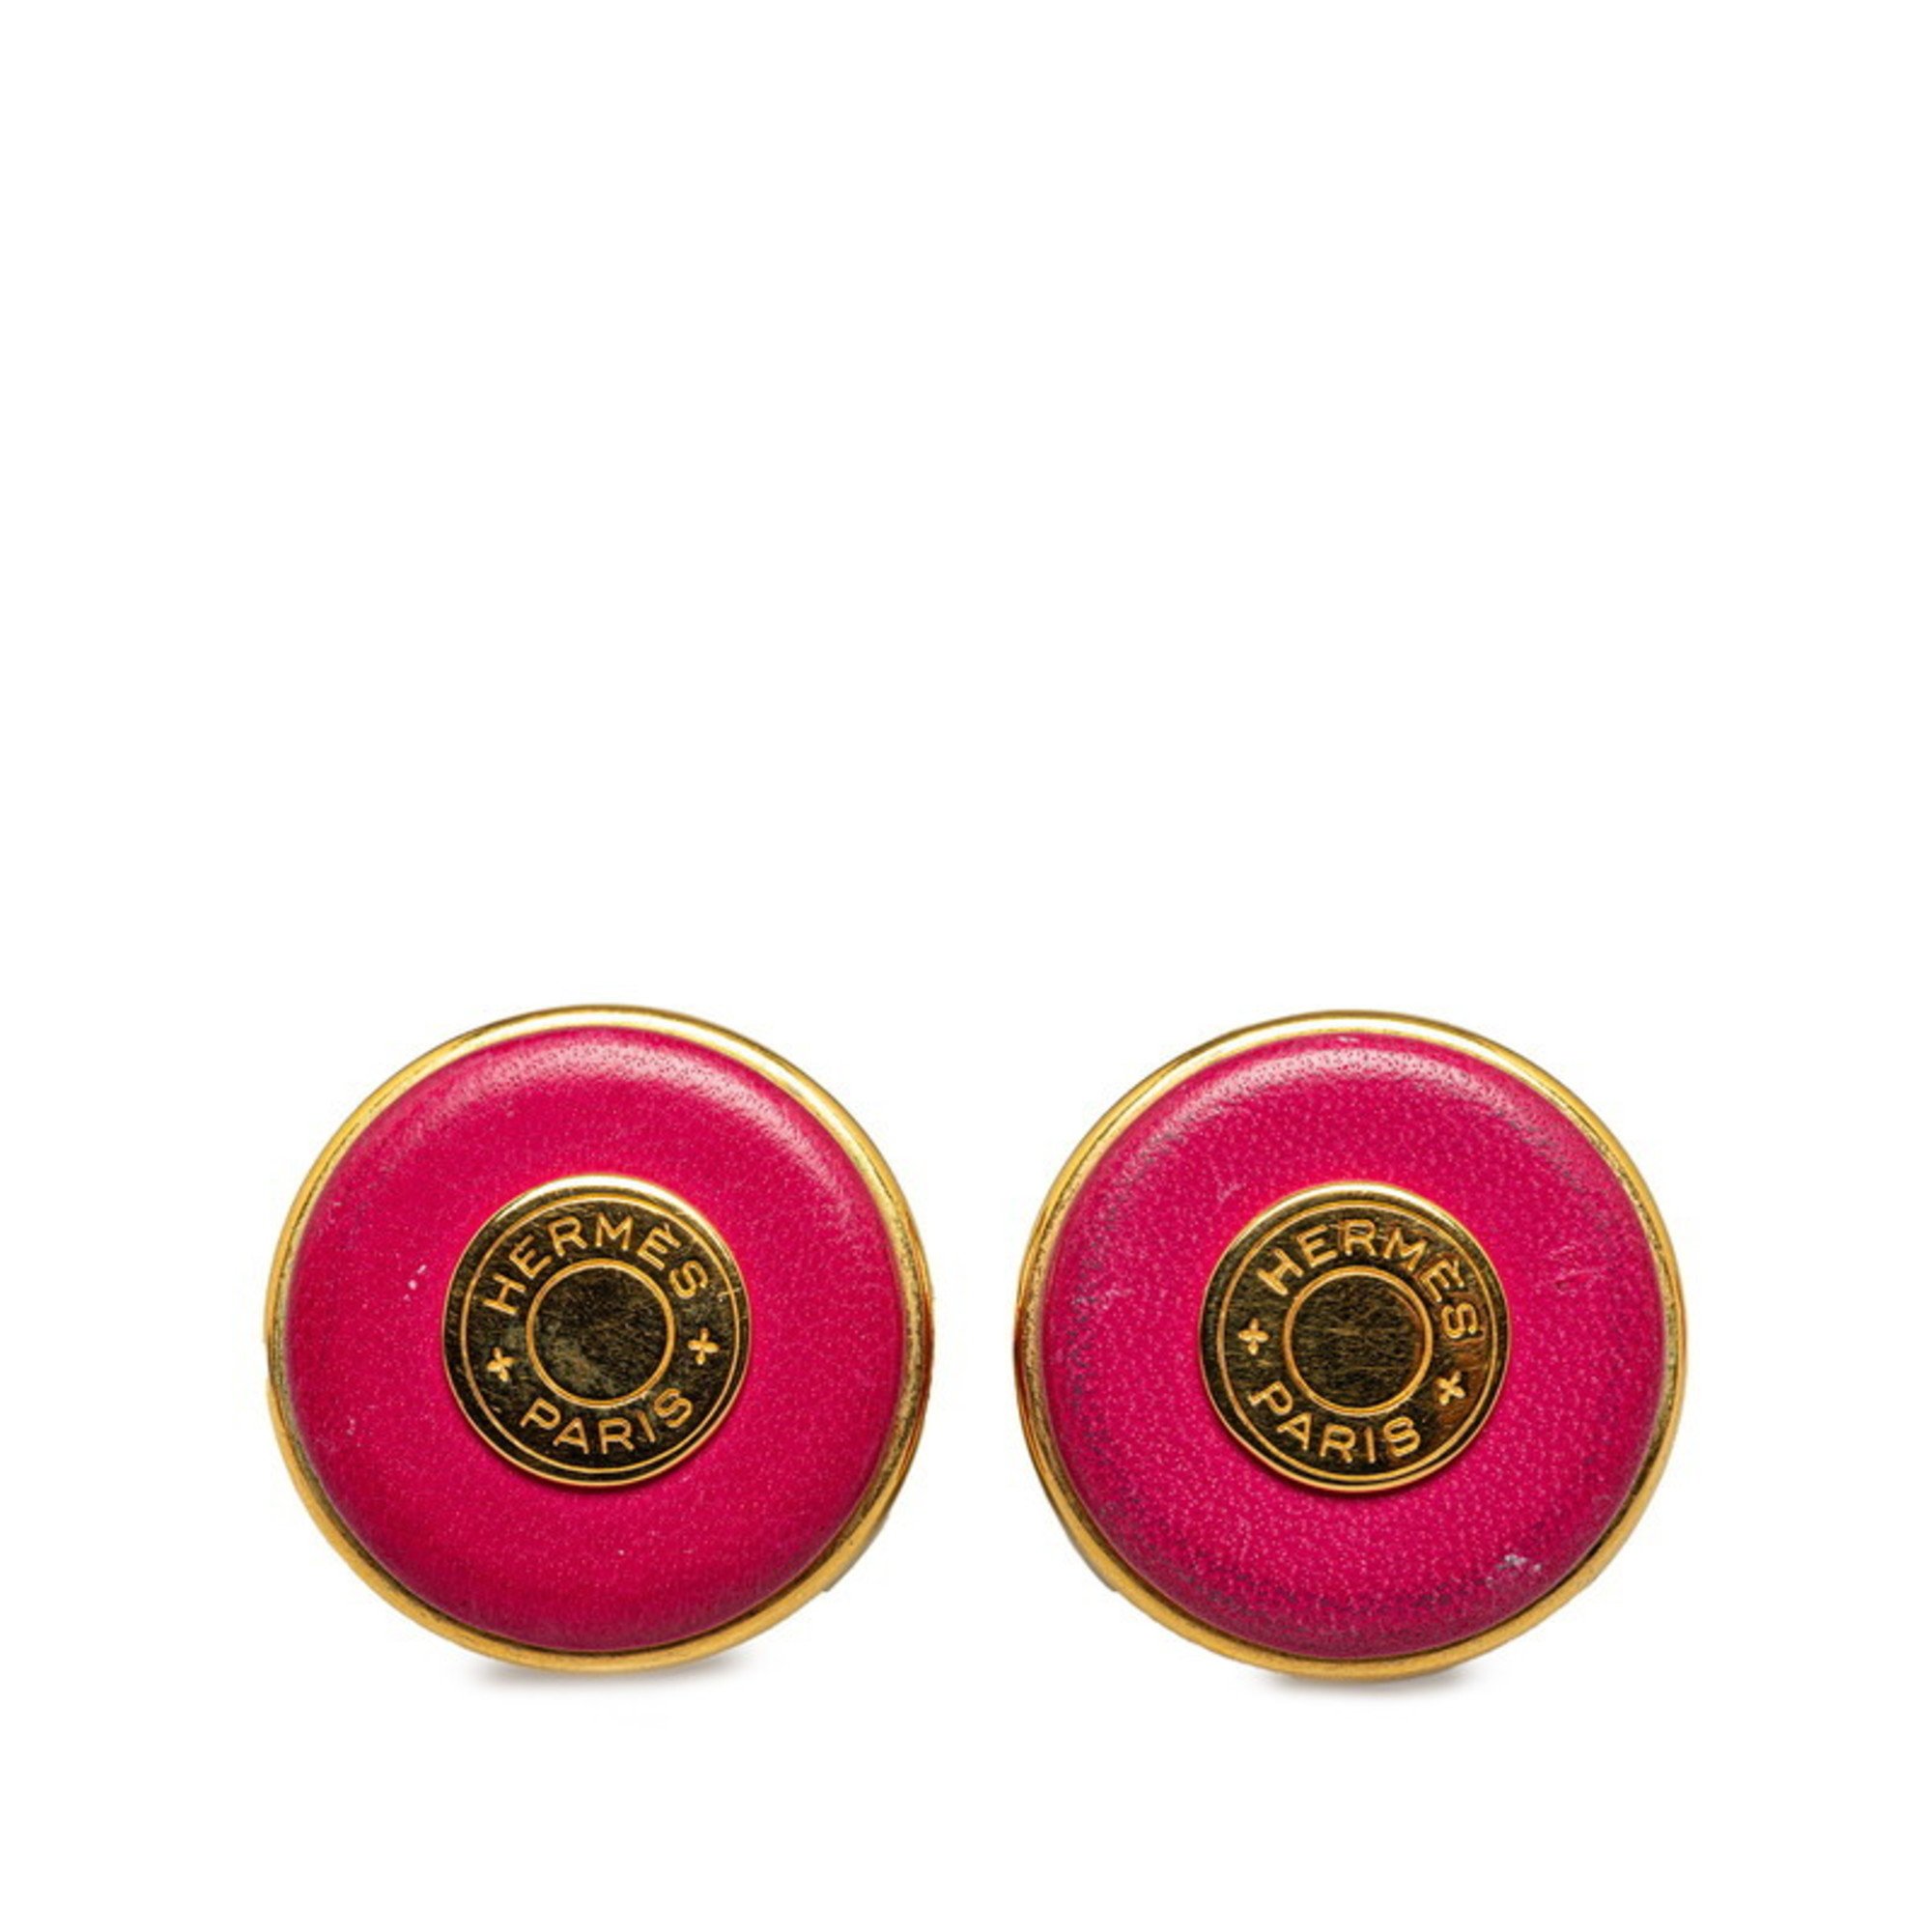 Hermes Serie Earrings Pink Gold Leather Plated Women's HERMES